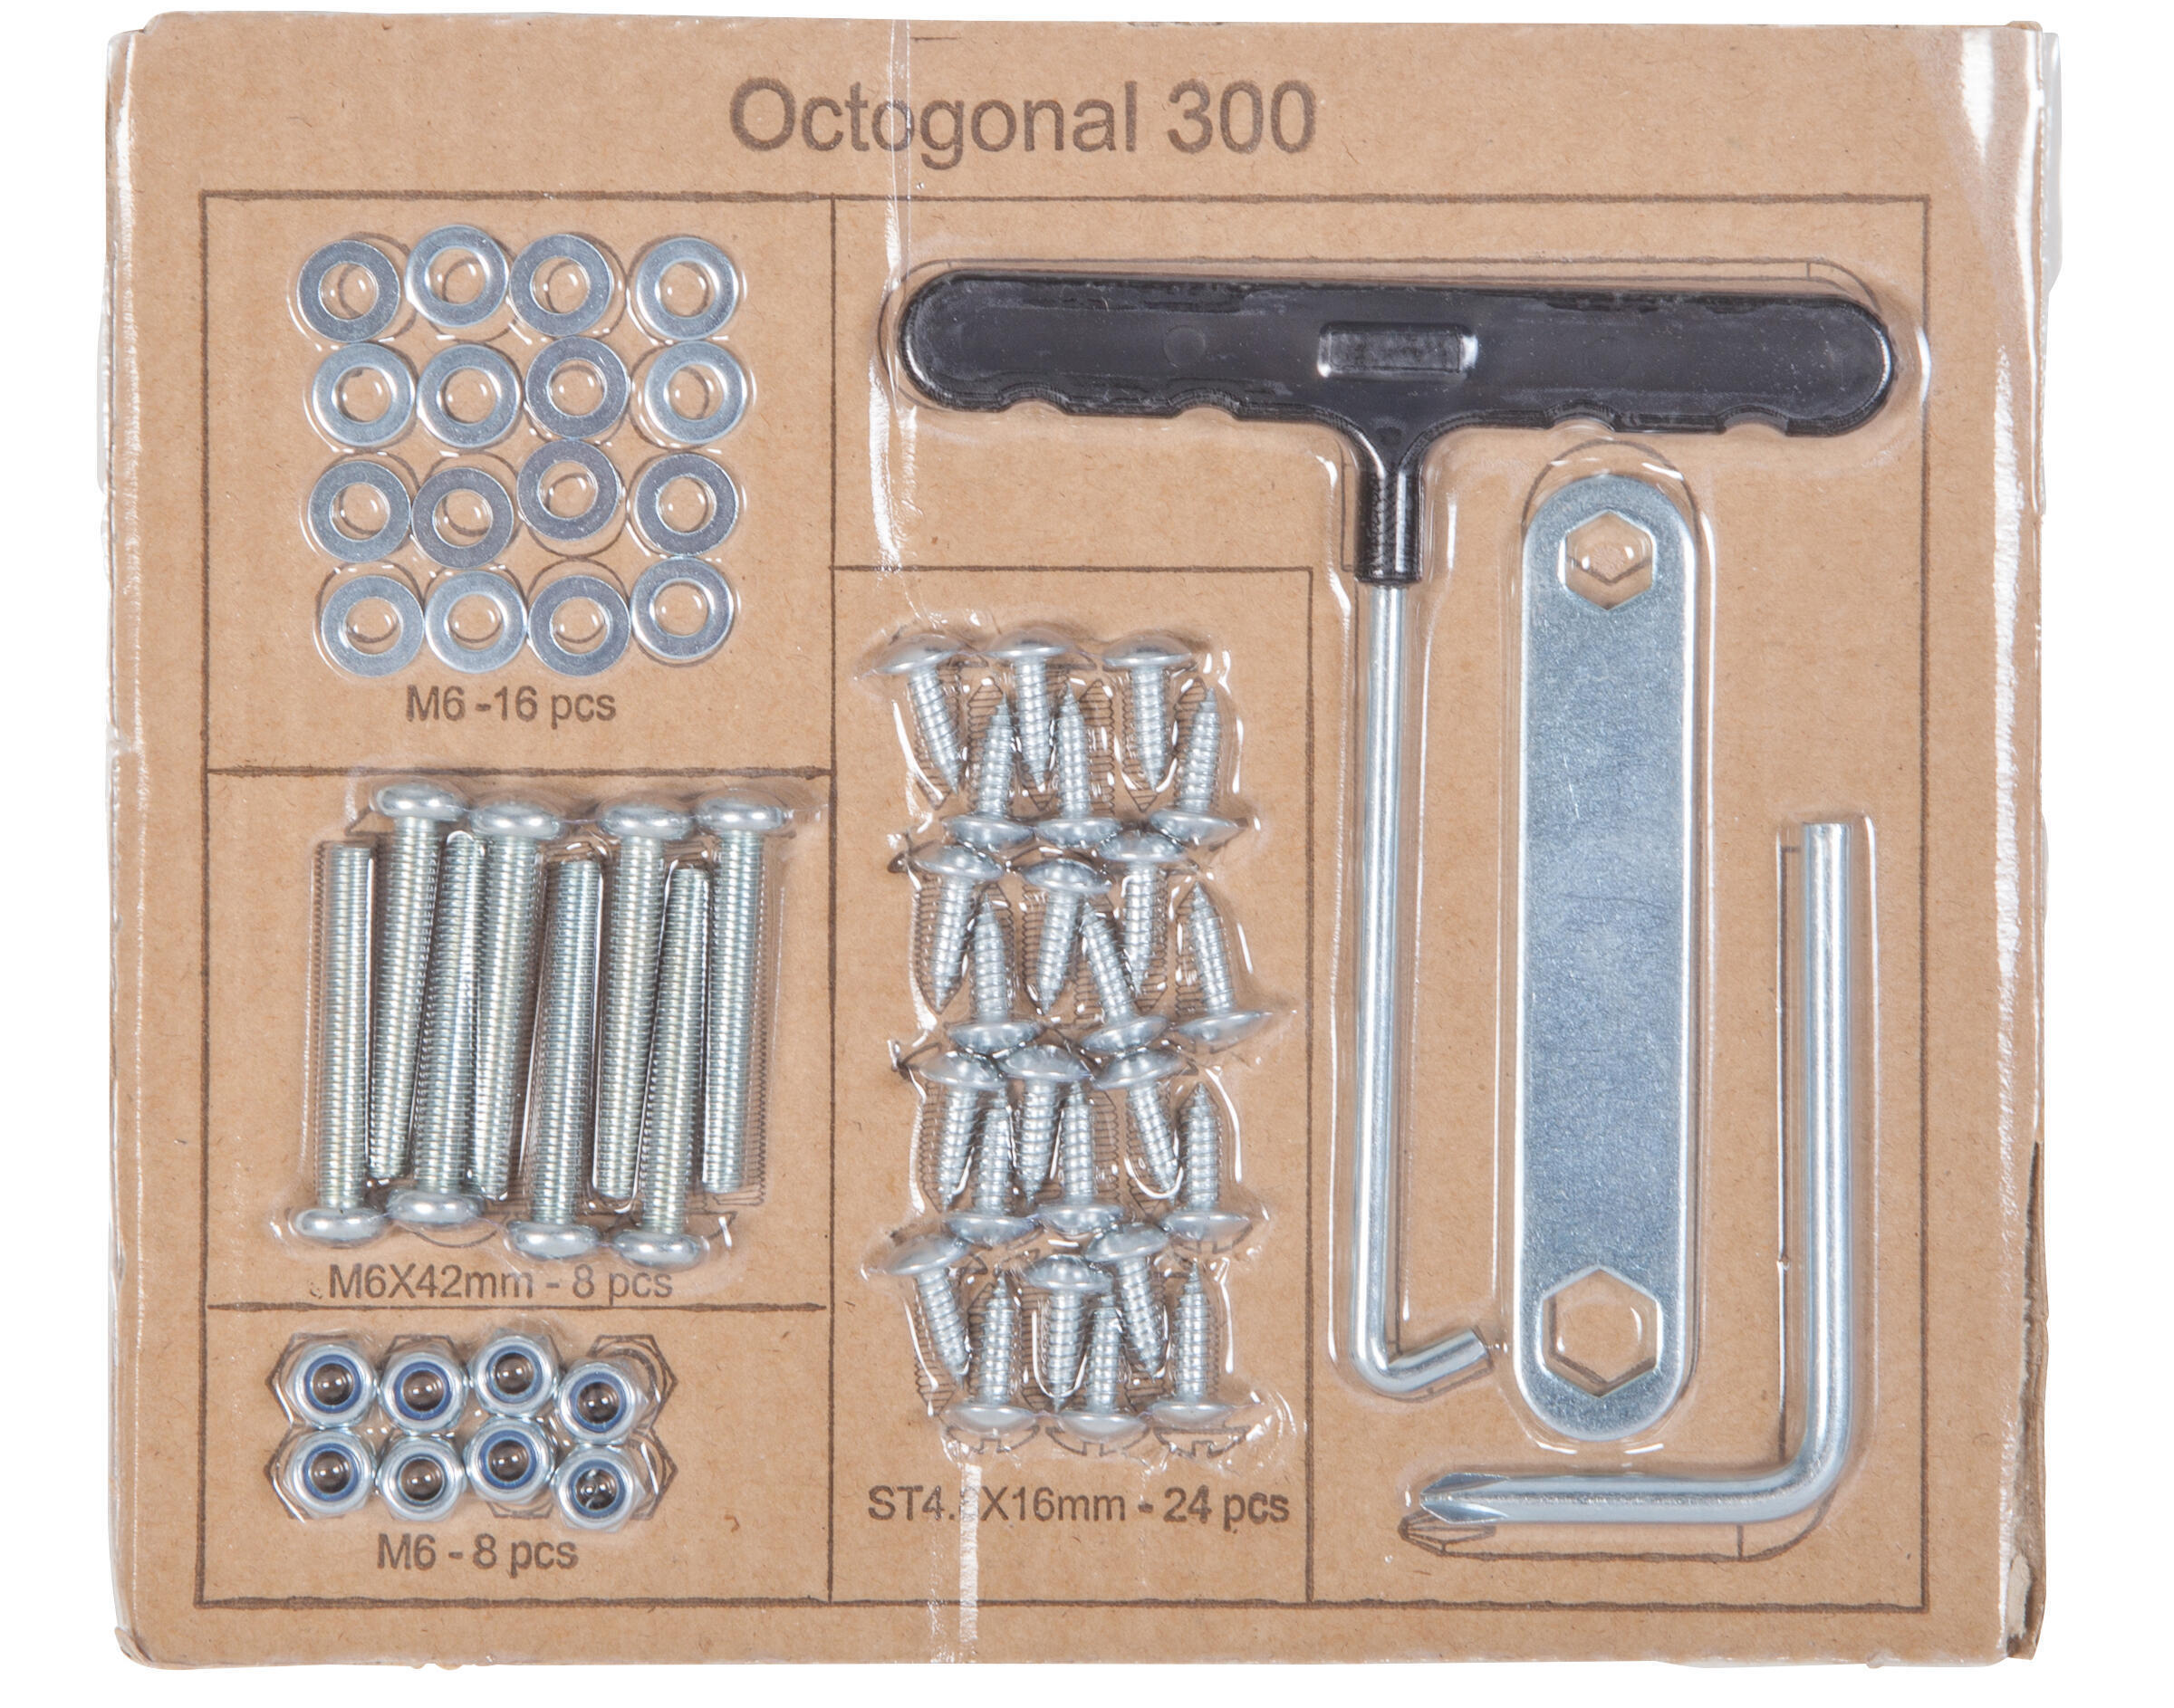 Octagonal 300 screws kit